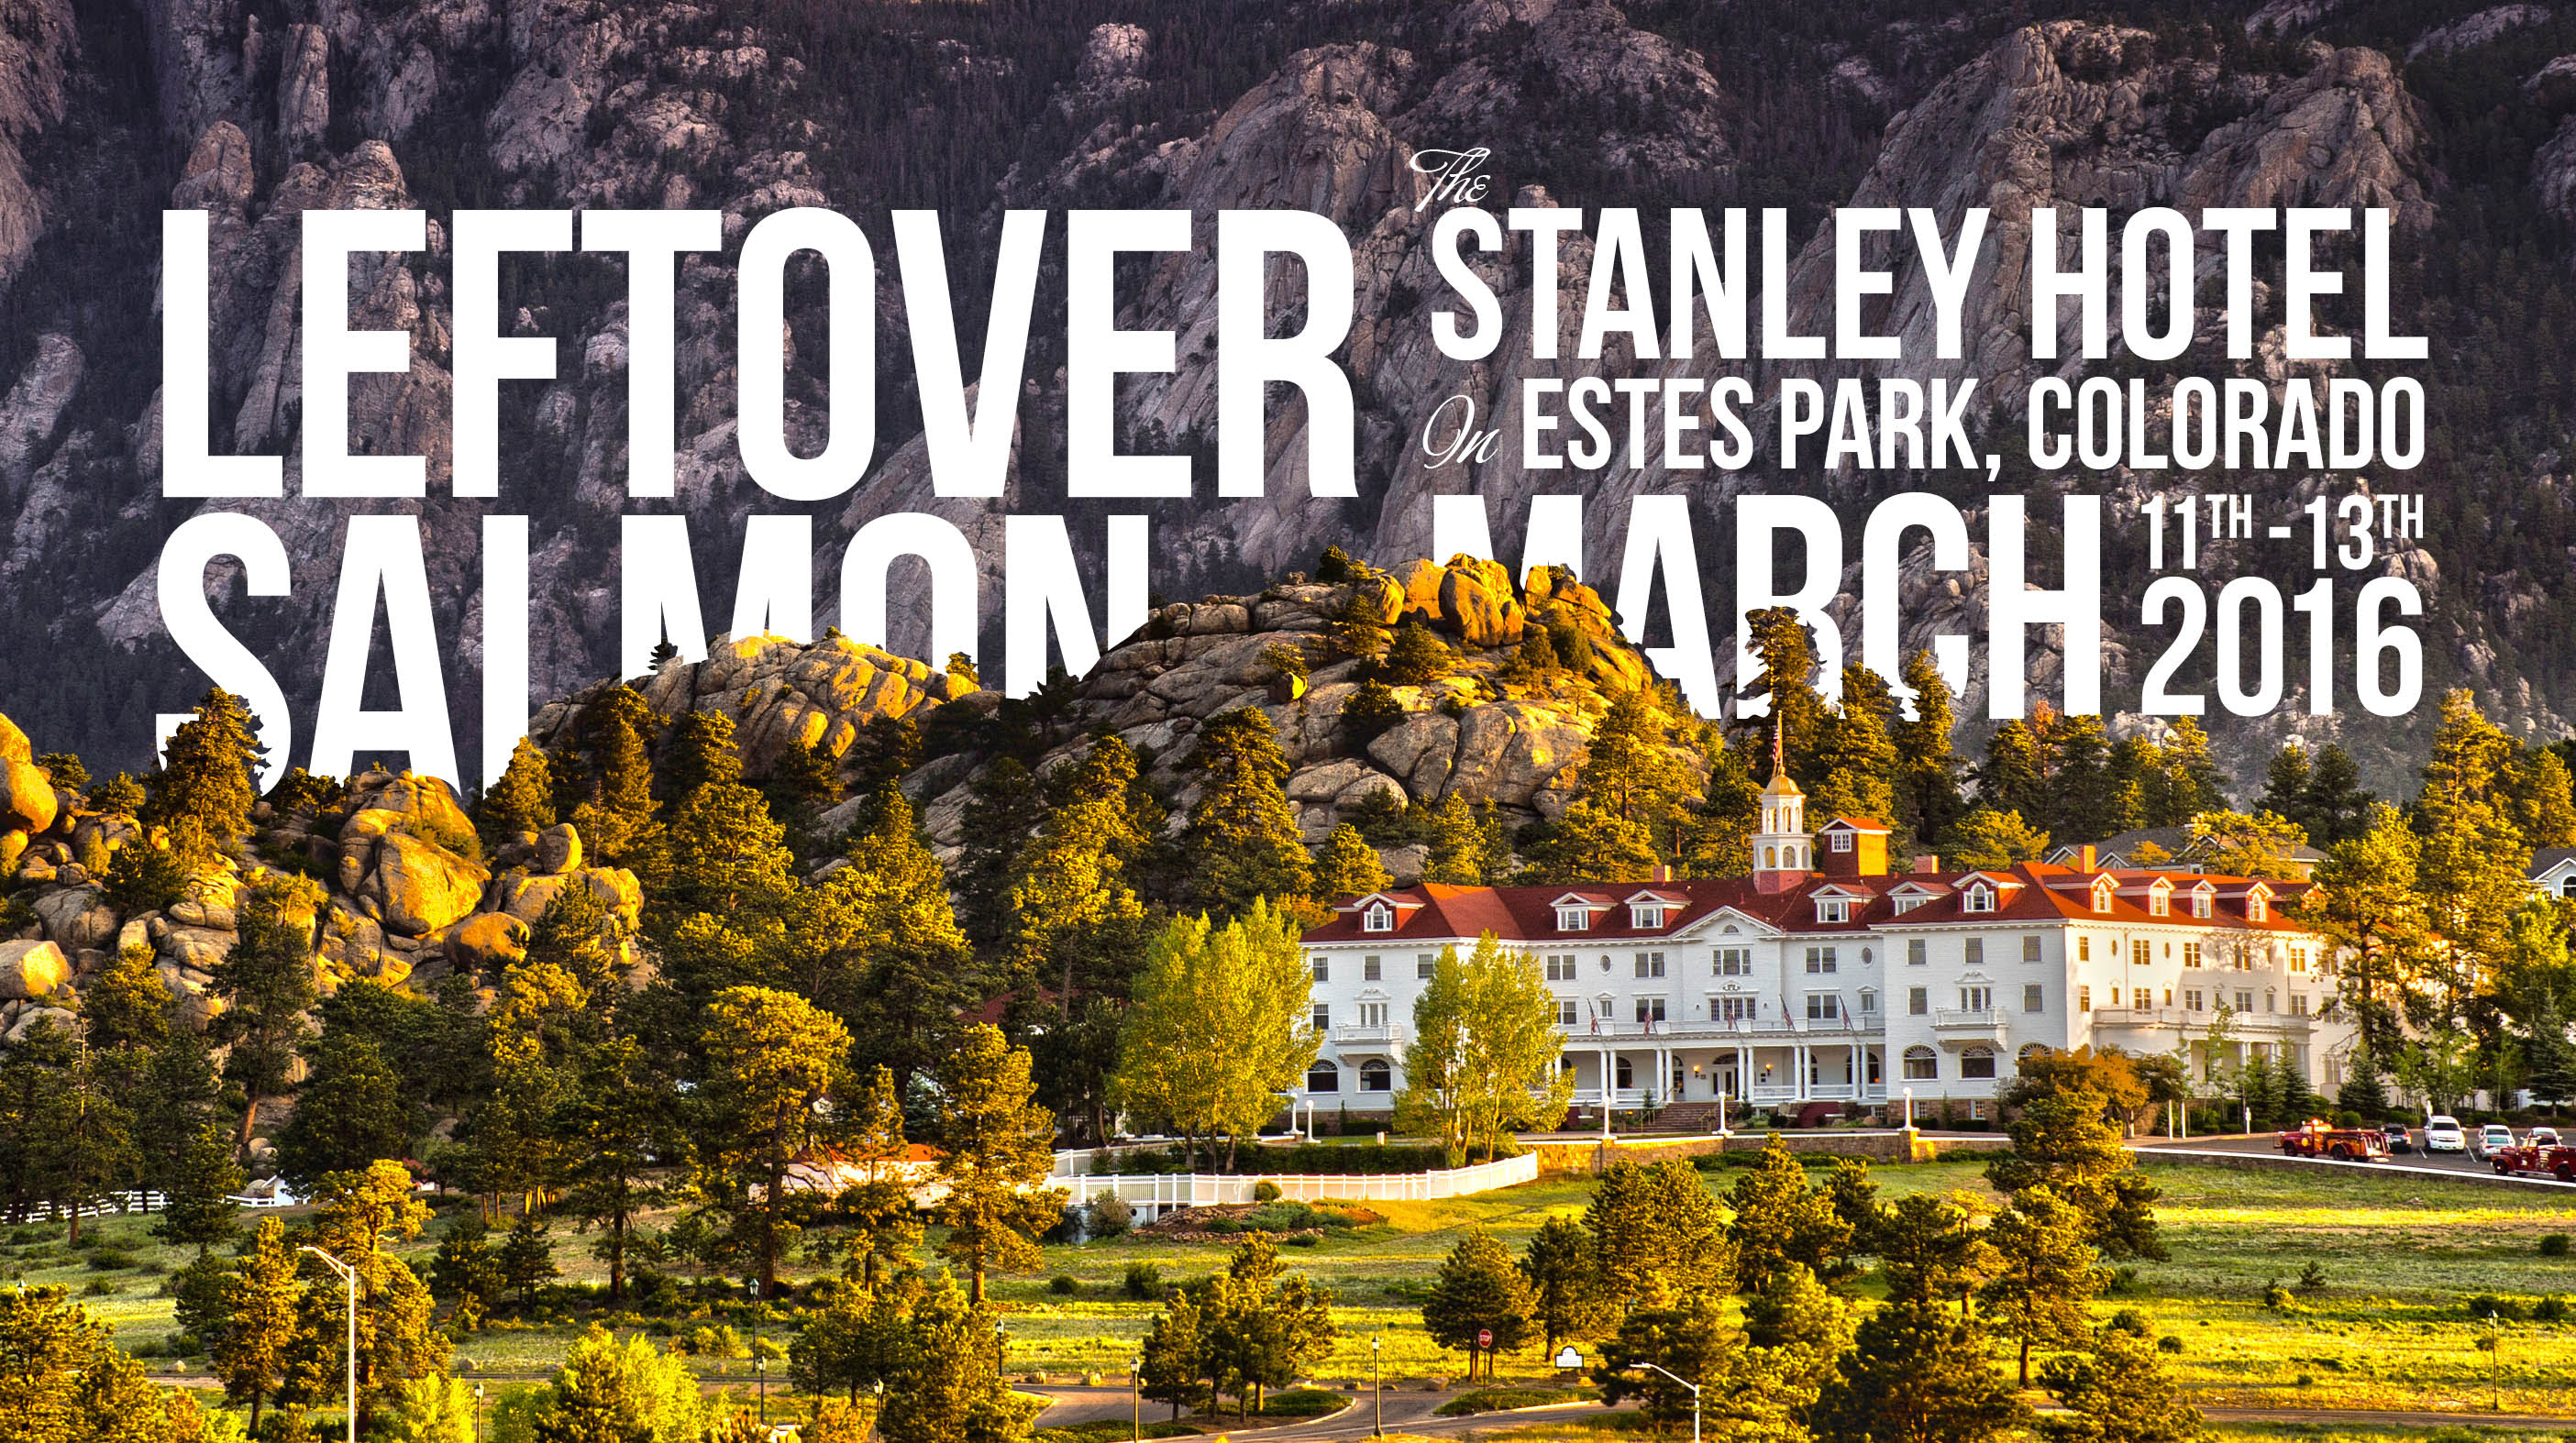 Leftover Salmon Announces Stanley Hotel 2016